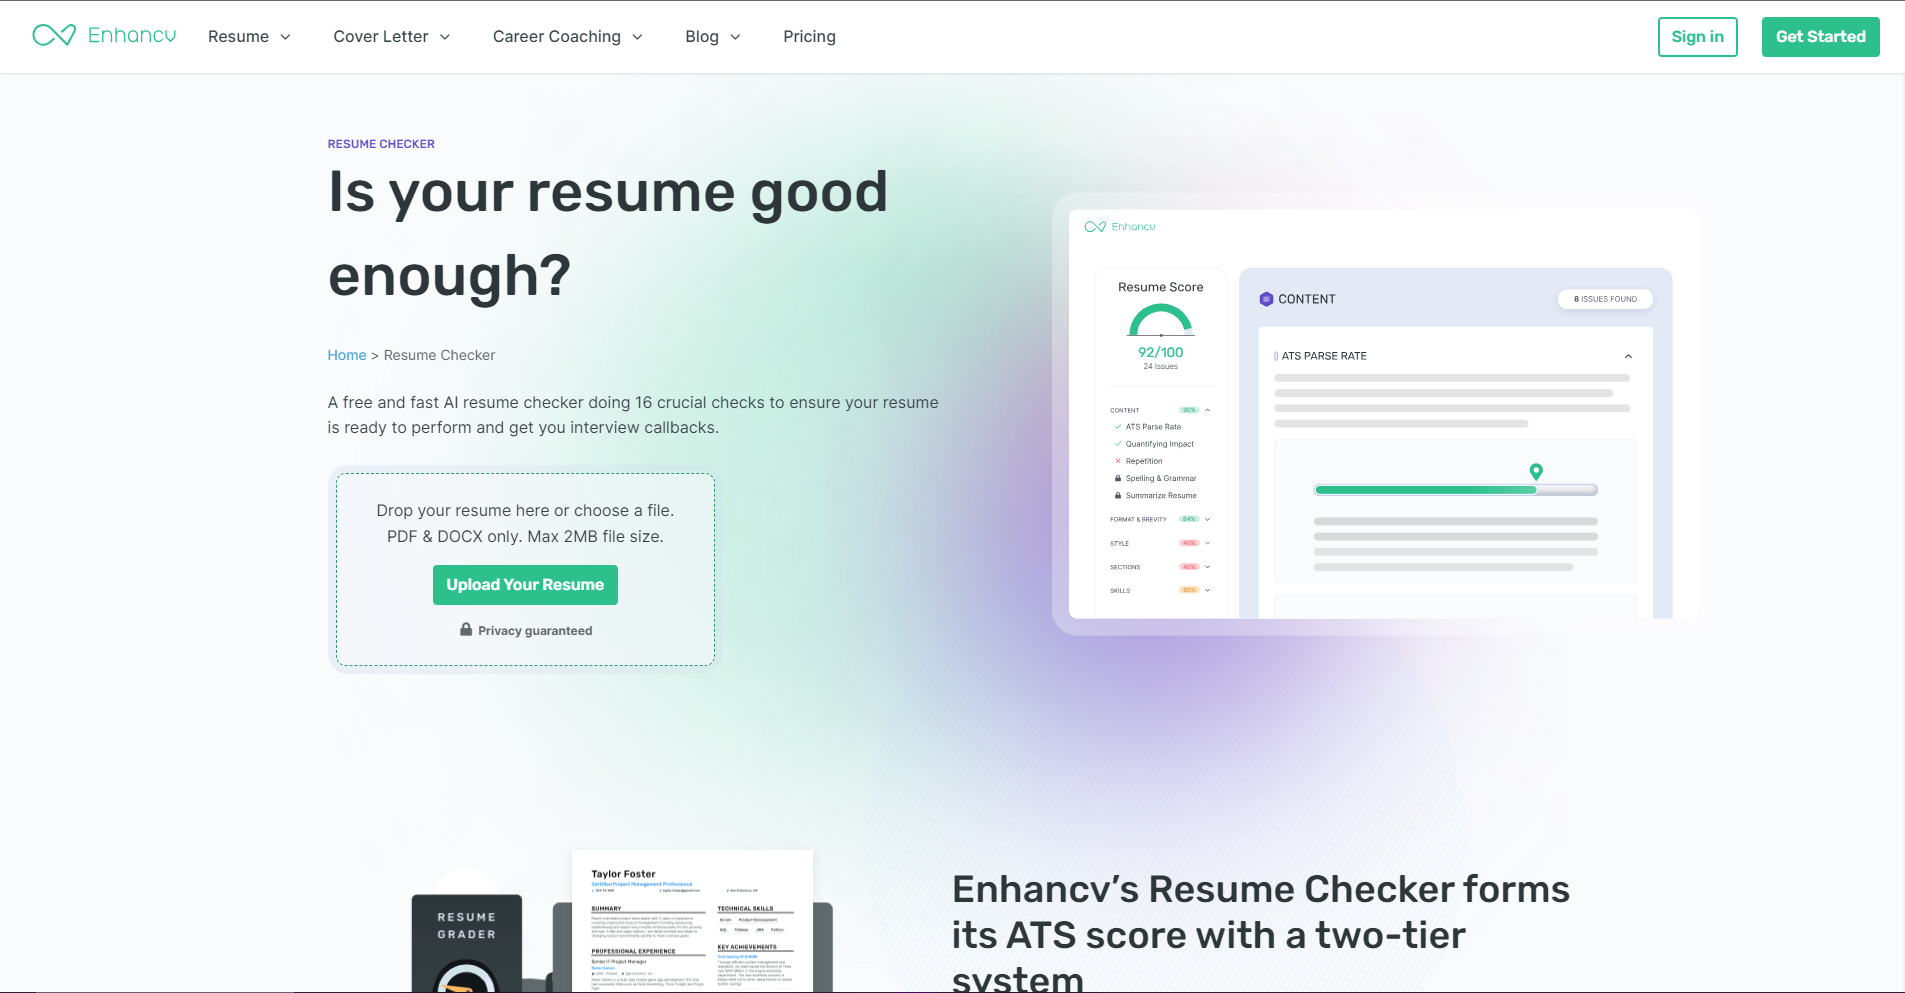 Resume Checker by Enhancv